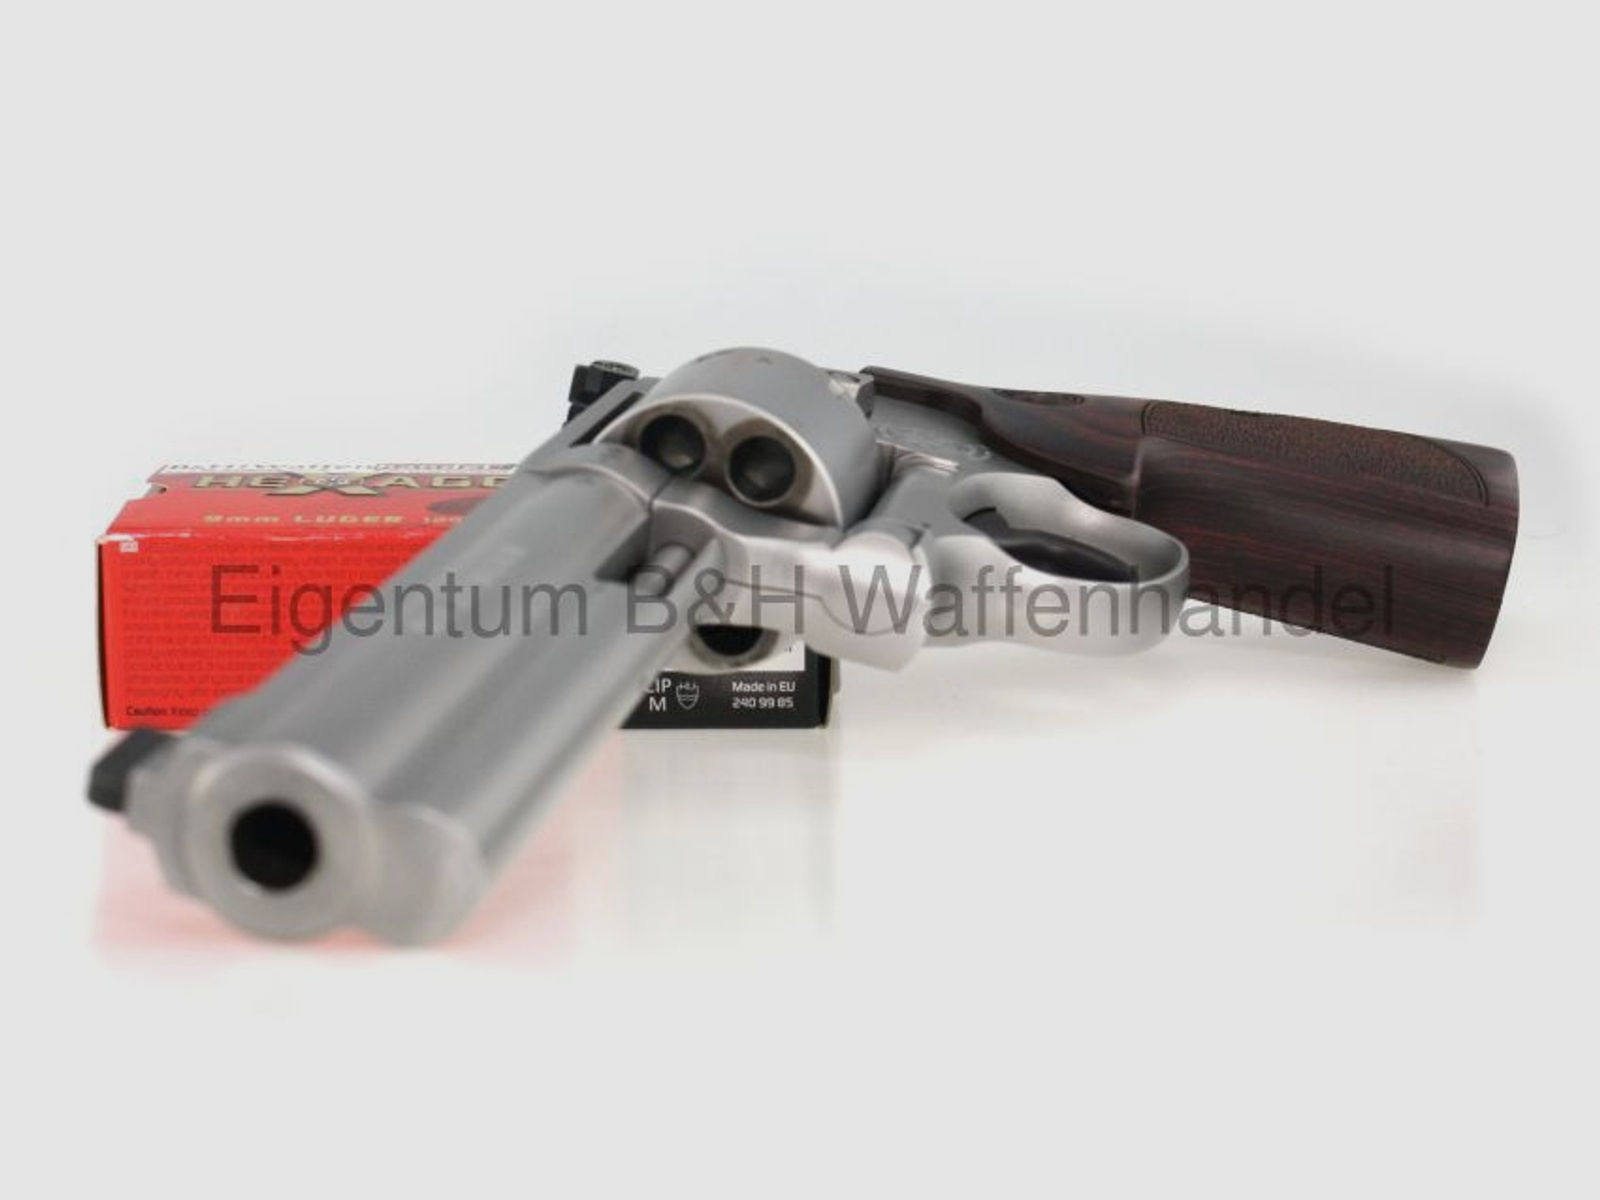 Smith & Wesson	 686 International 6 Zoll